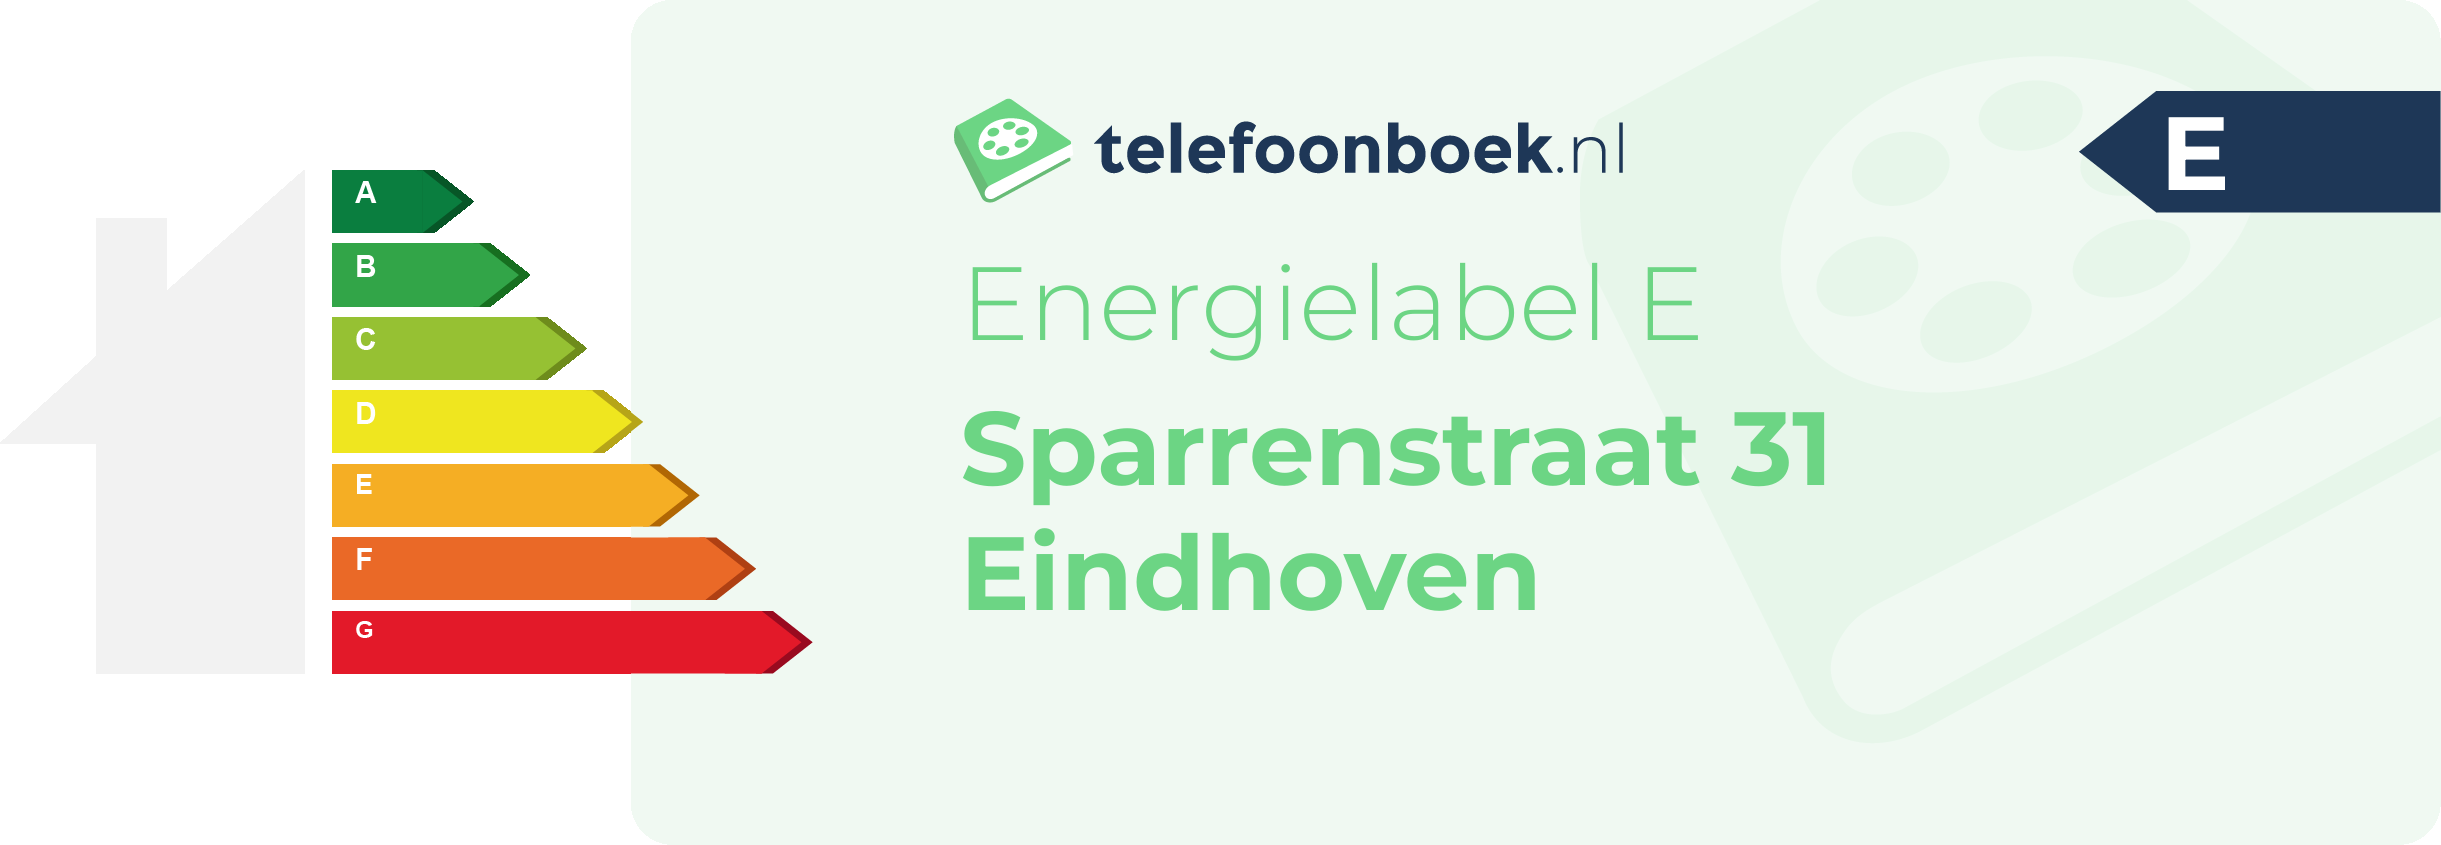 Energielabel Sparrenstraat 31 Eindhoven